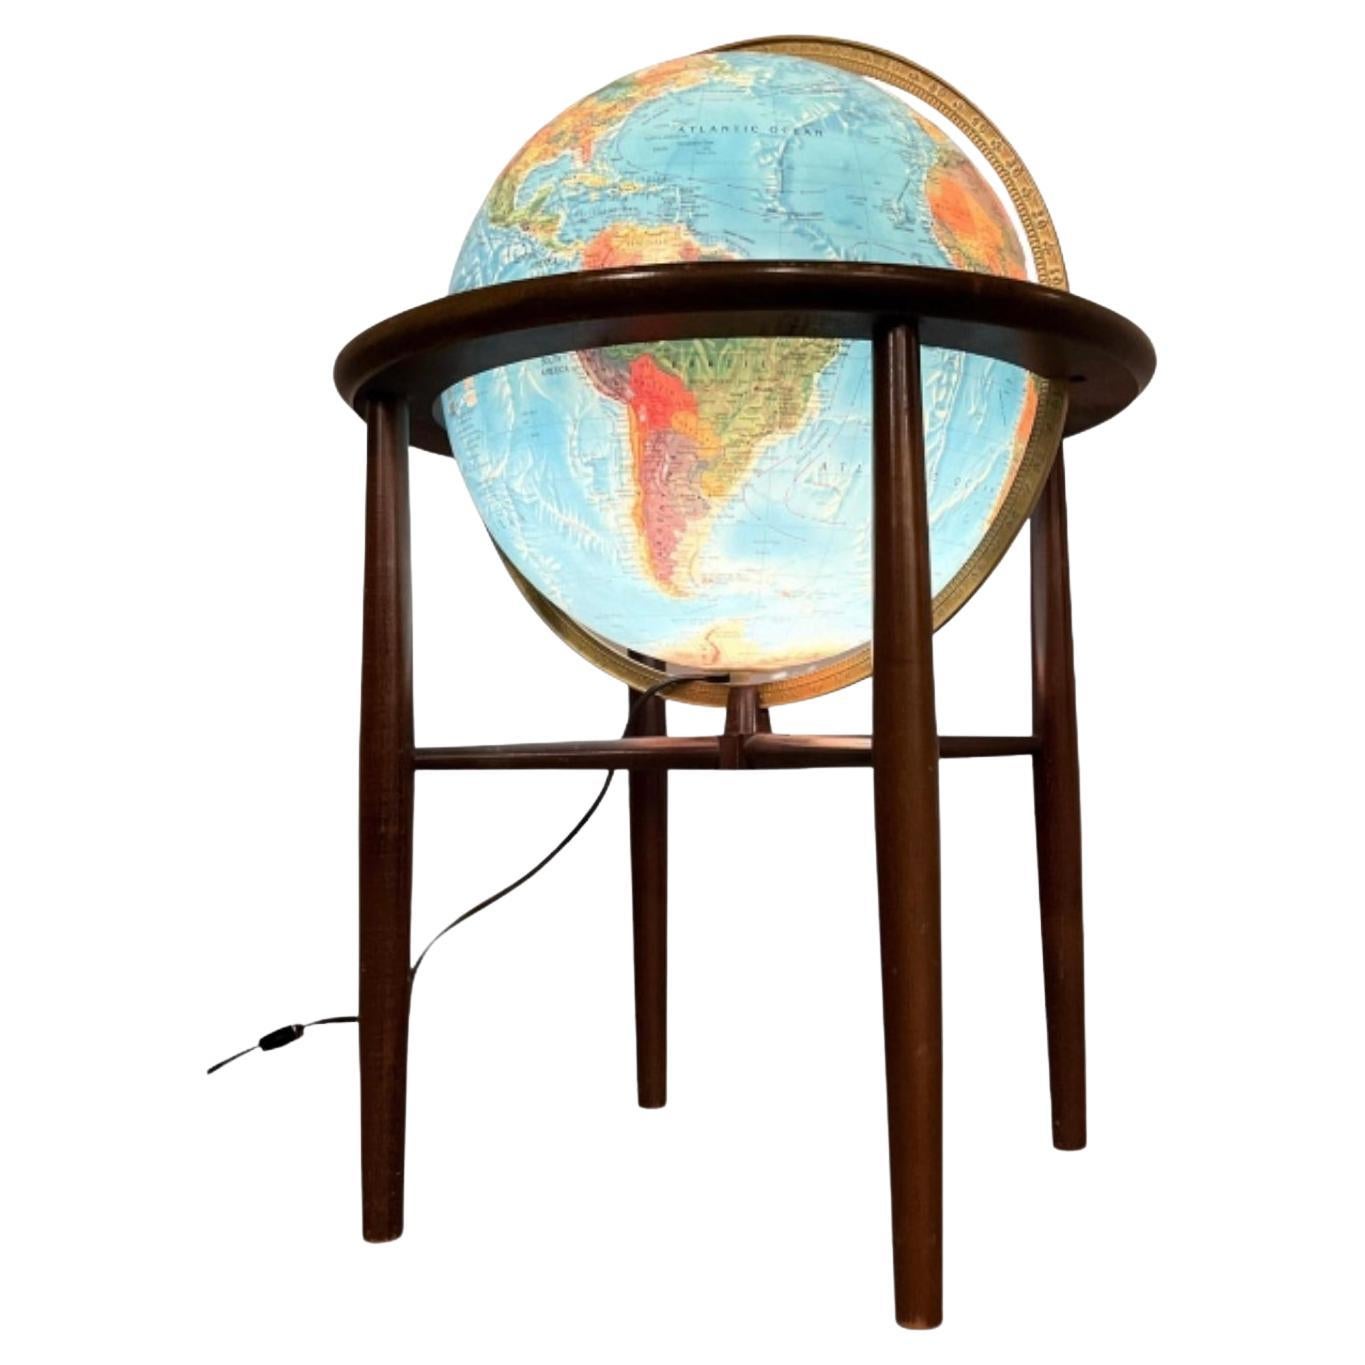 Midcentury Modern Replogle Illuminated Glow Globe on Wood Stand